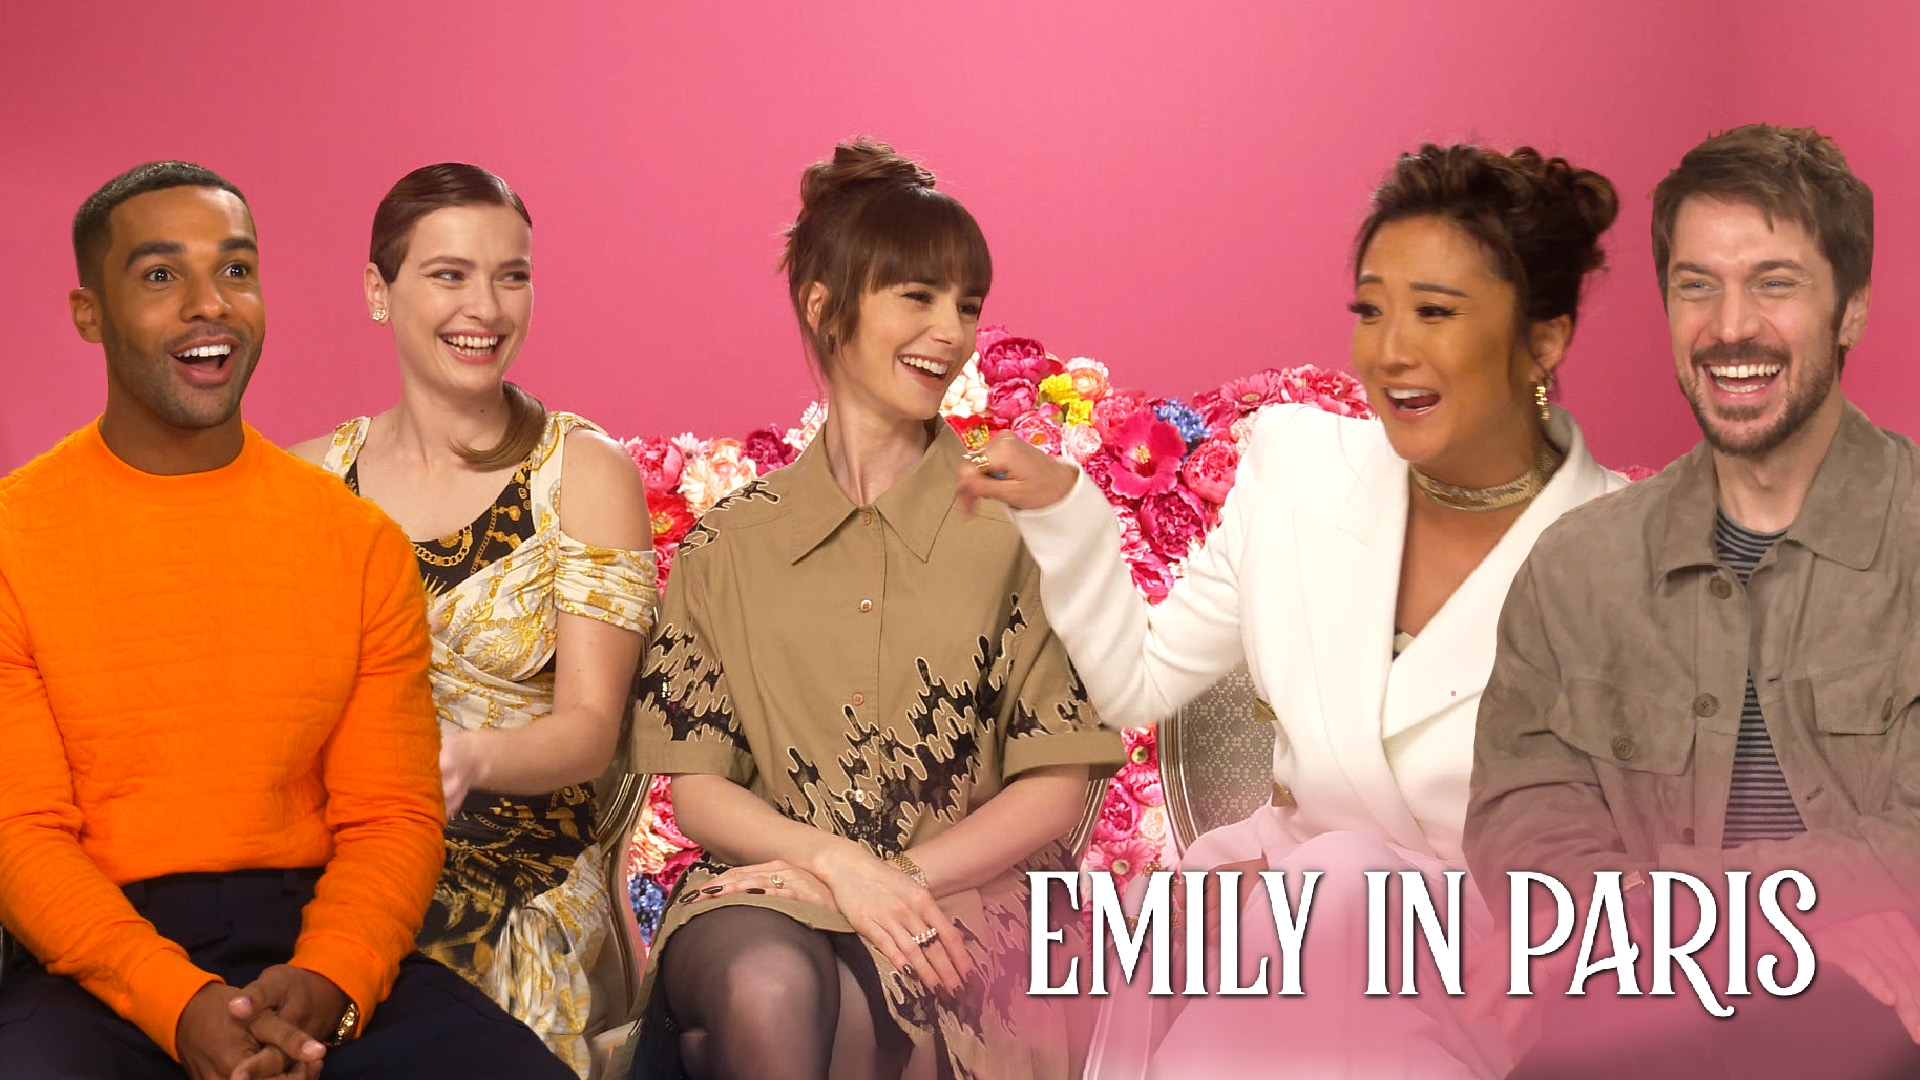 Emily In Paris' Season 4: Plot, Cast, News & More